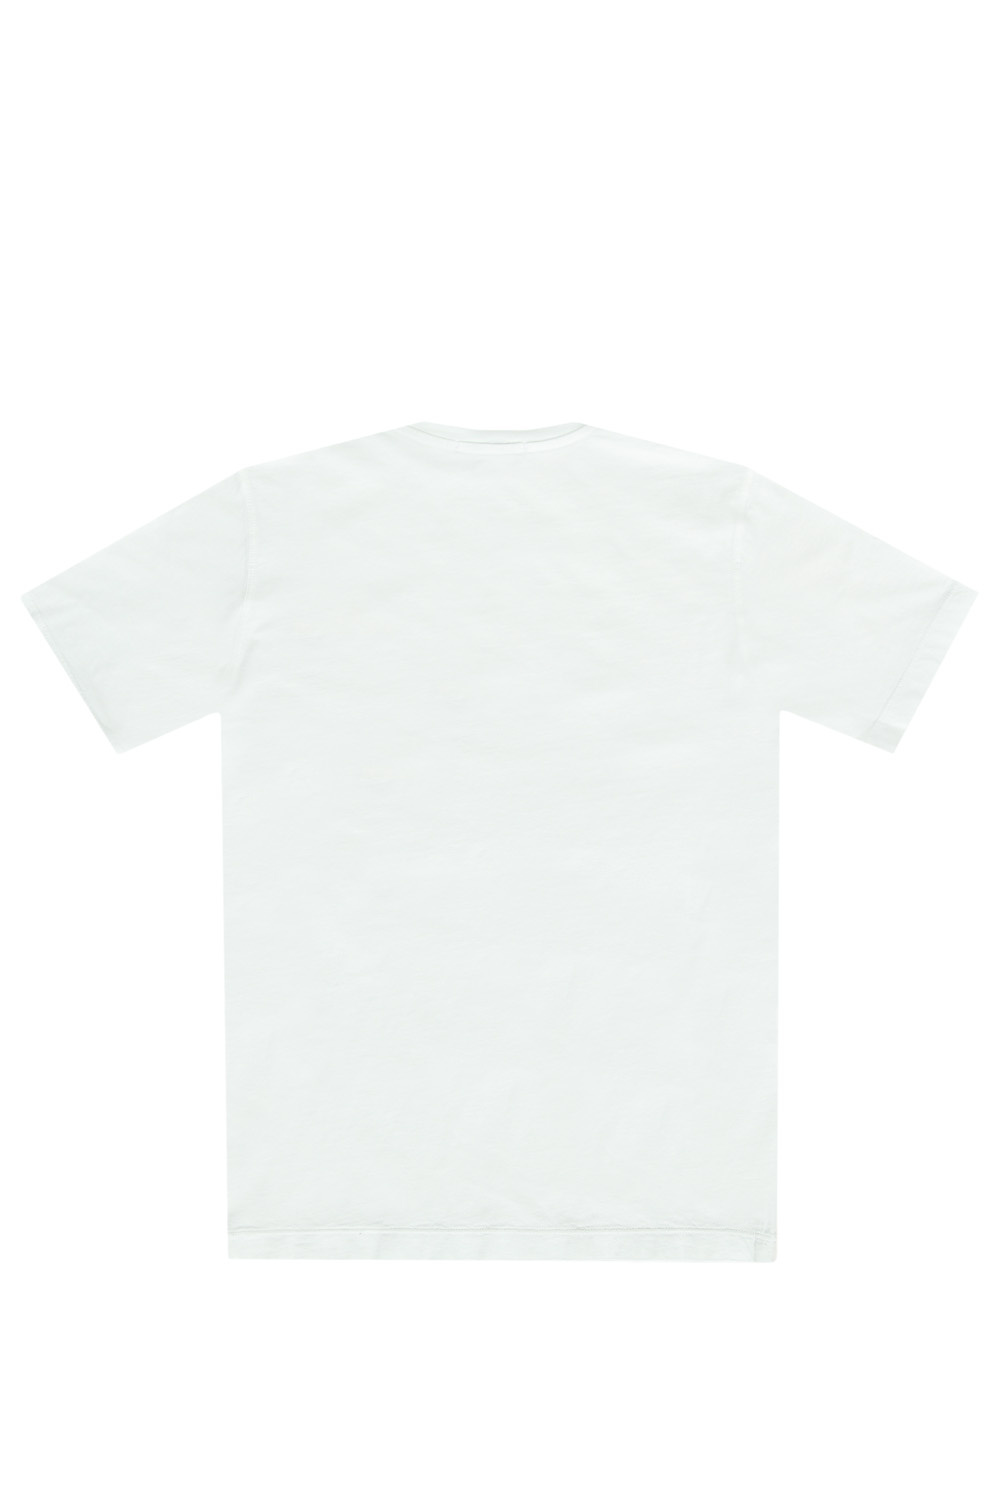 Stone Island Kids T-shirt short-sleeved with logo